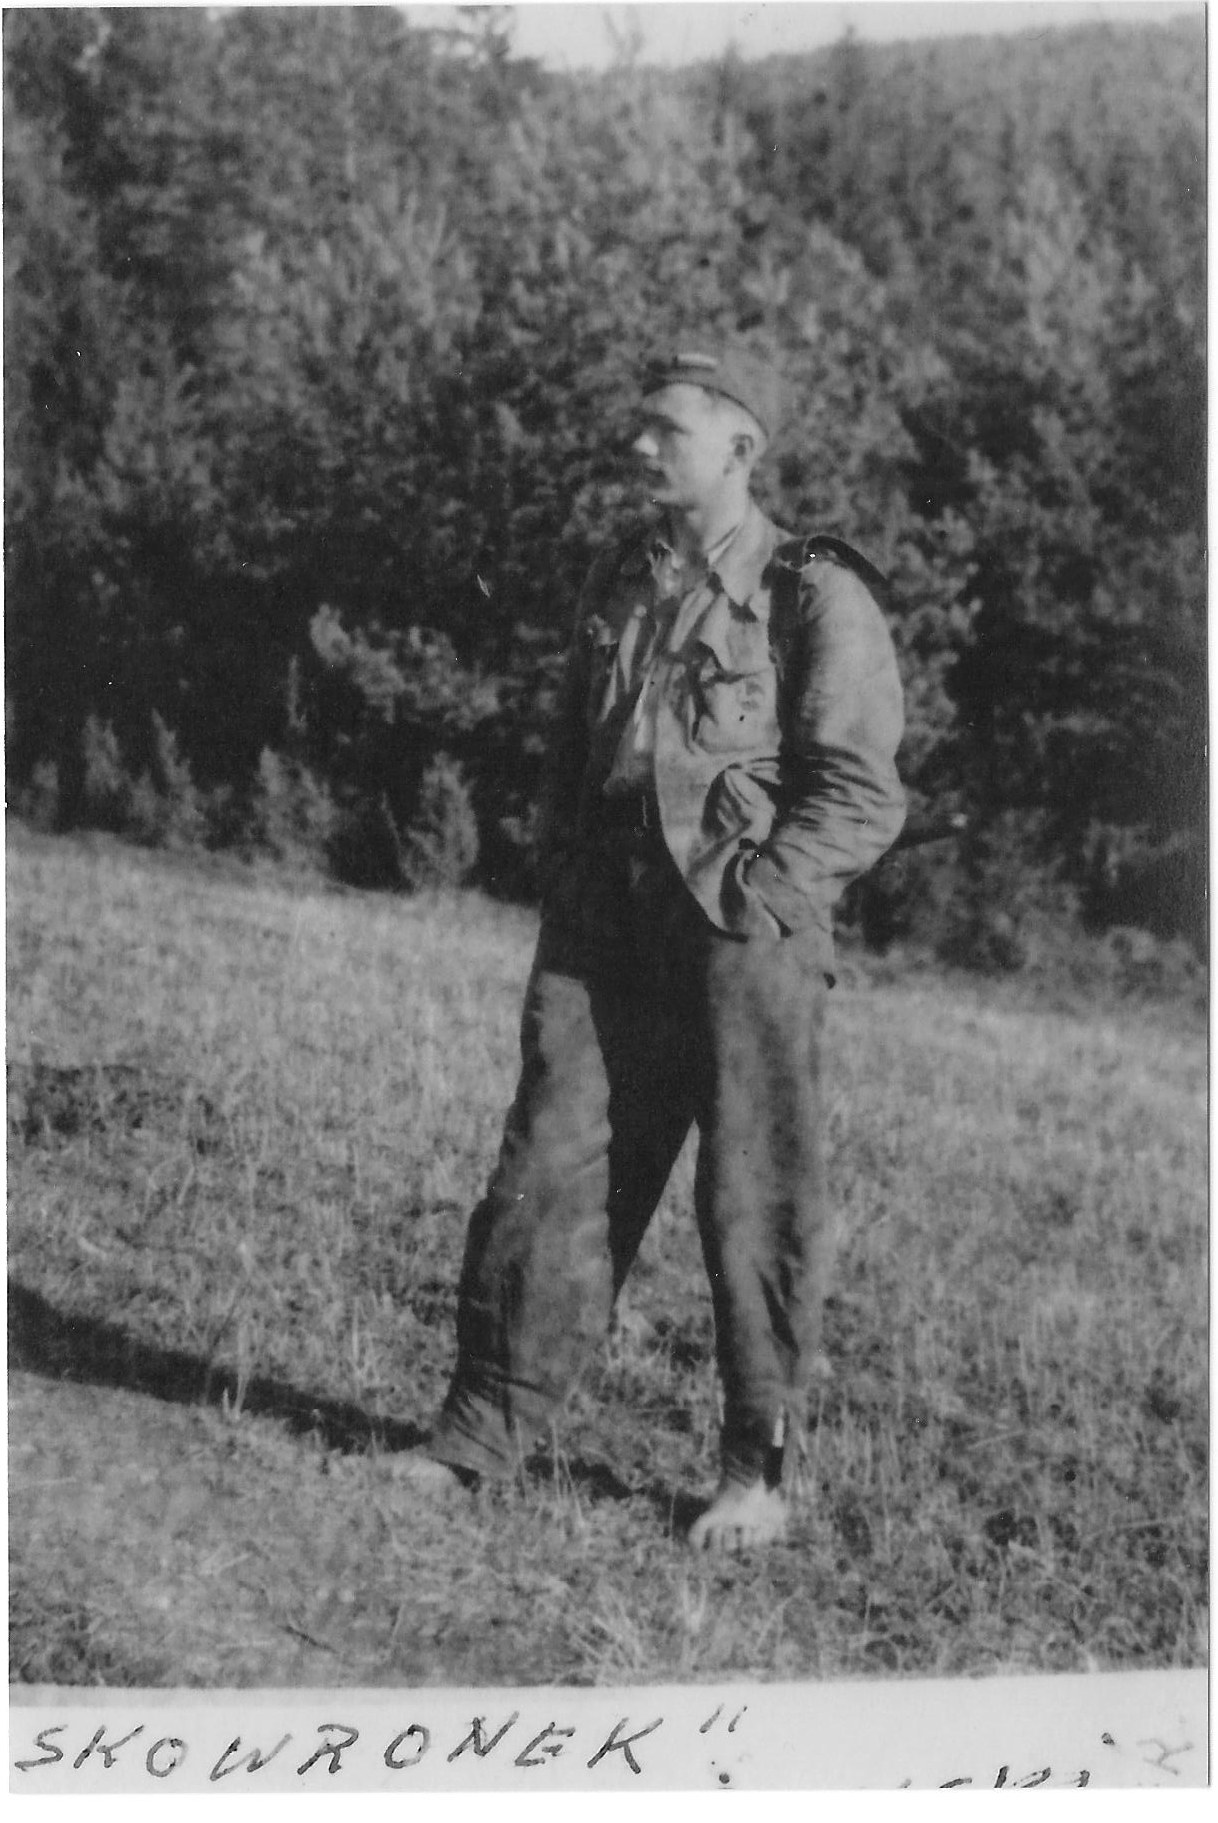 Photo: Stanisław Skowroński  Skowronek in 1944